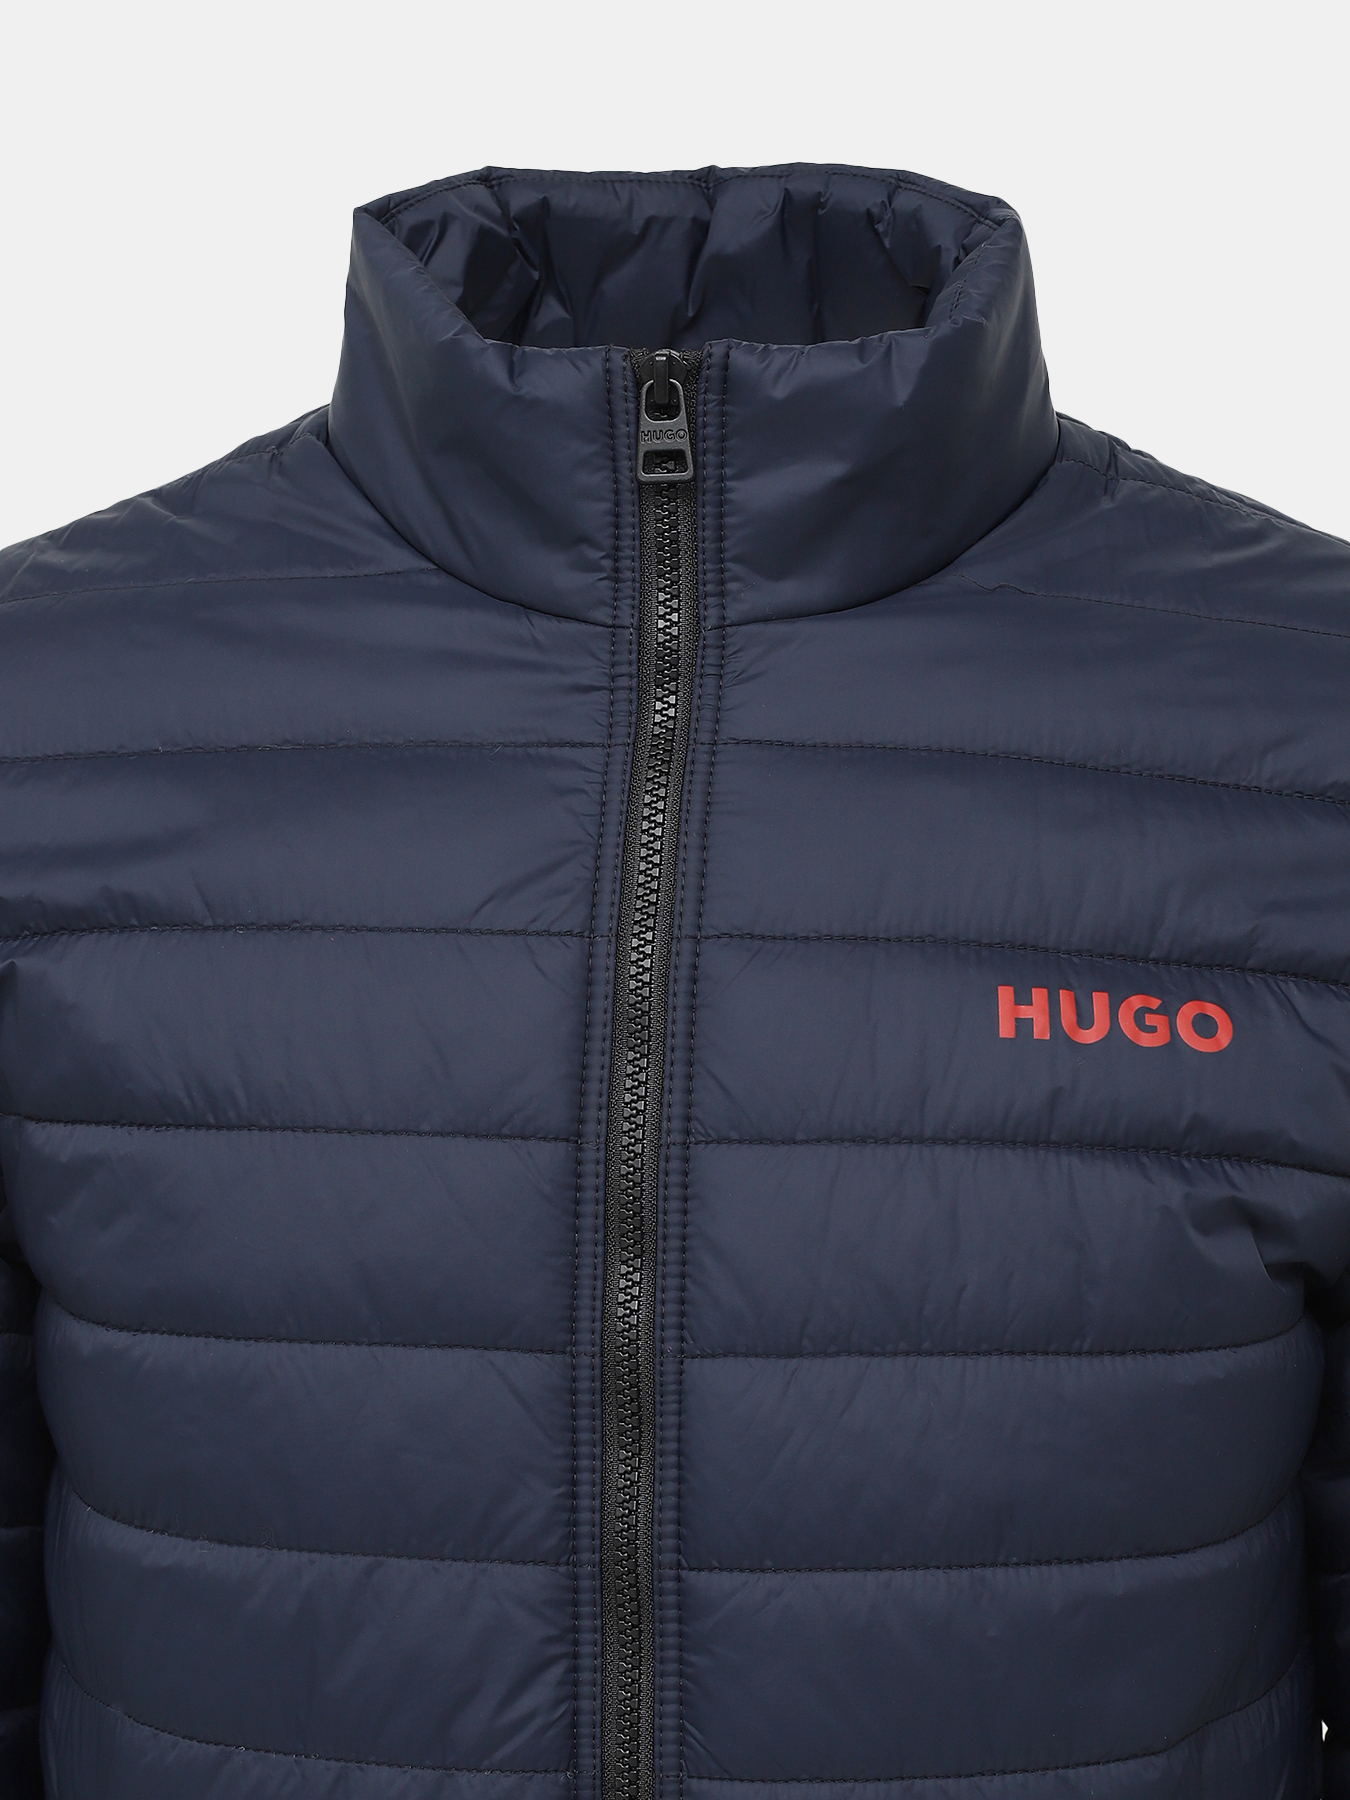 Куртка Benti HUGO 437018-042, цвет темно-синий, размер 46-48 - фото 3